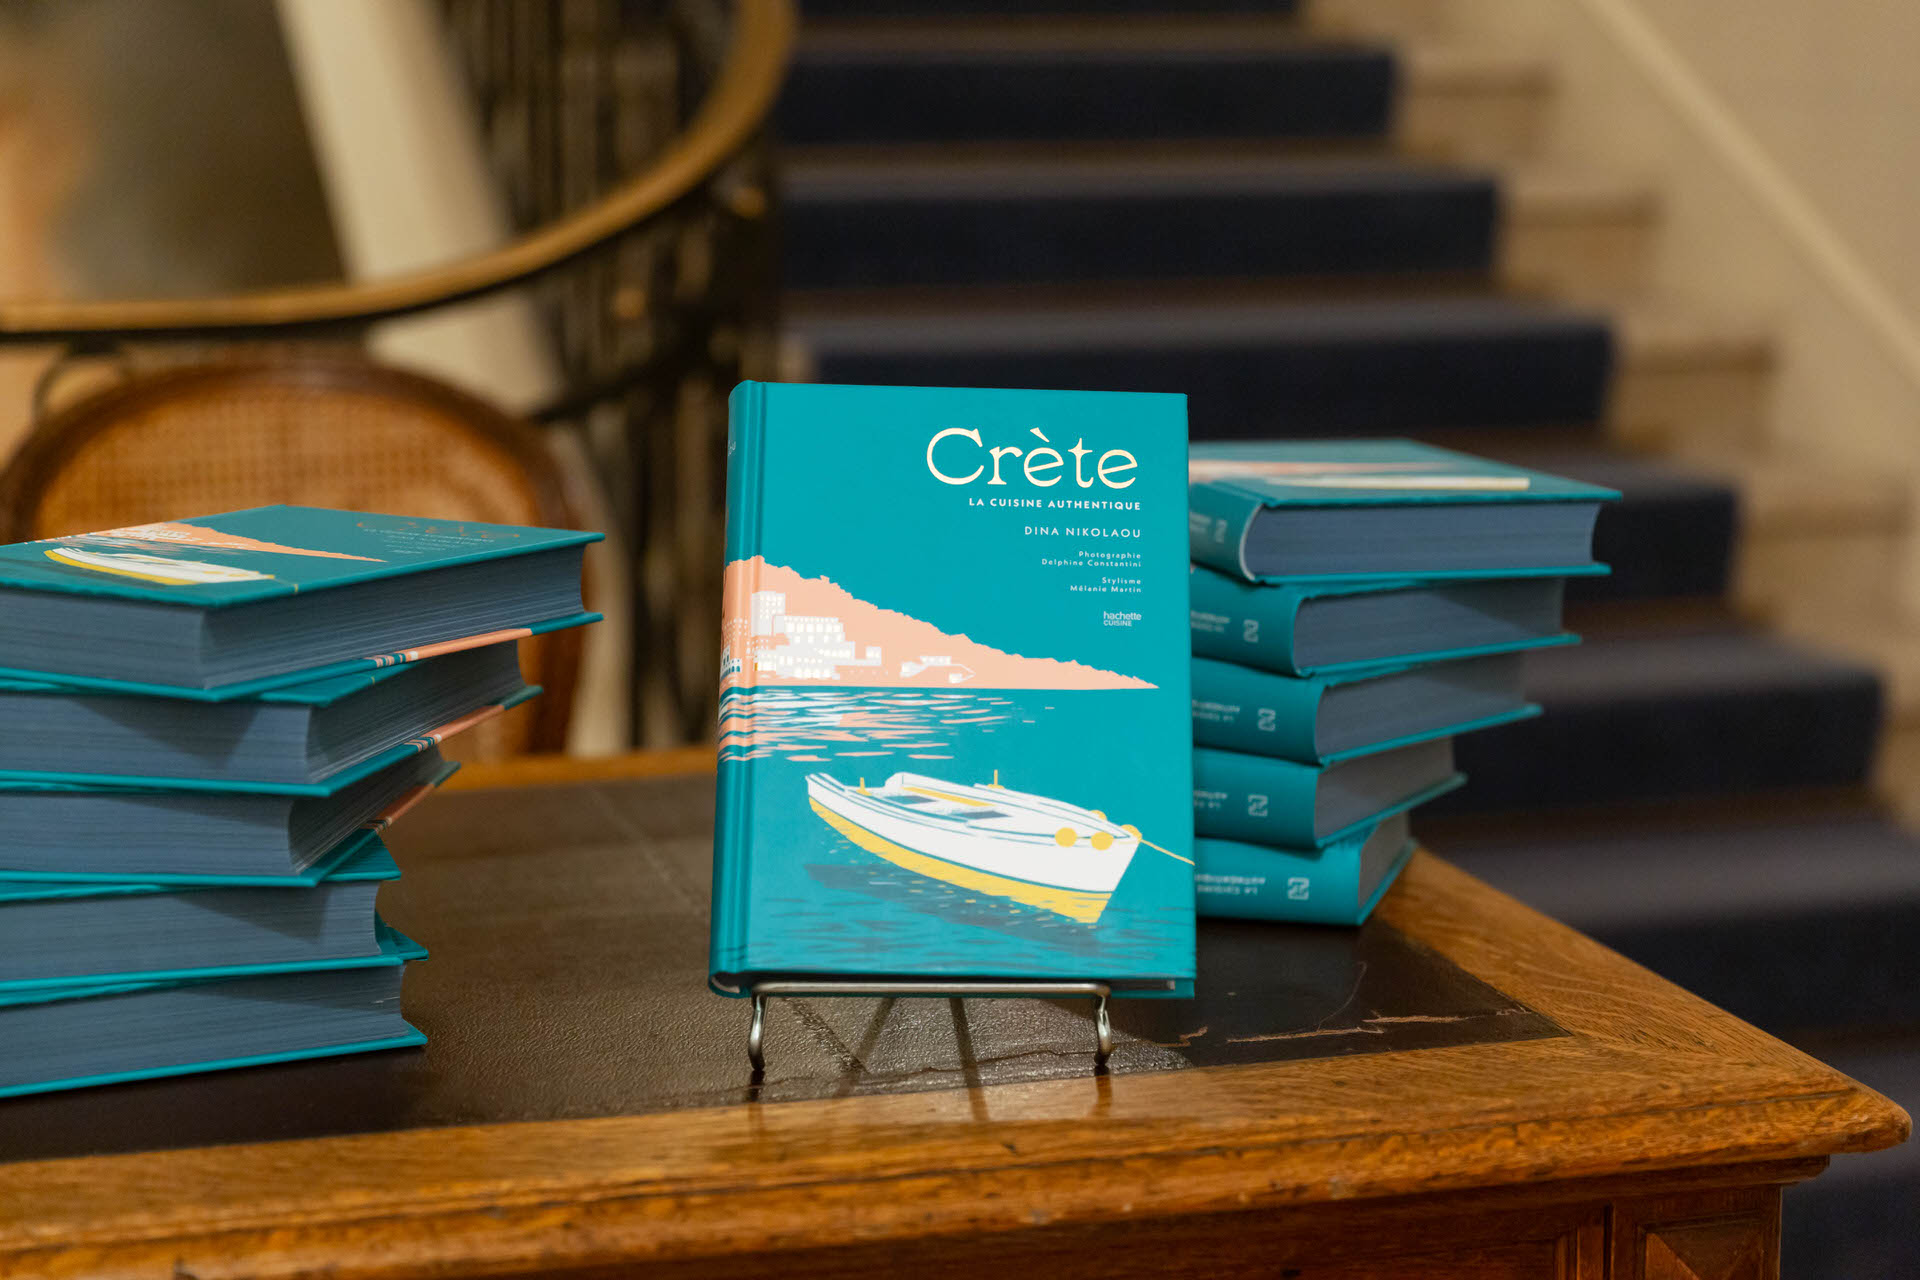 CRÈTE la cuisine authentique: Το νέο βιβλίο της Ντίνας Νικολάου στο επίκεντρο της Παρισινής γαστρονομίας